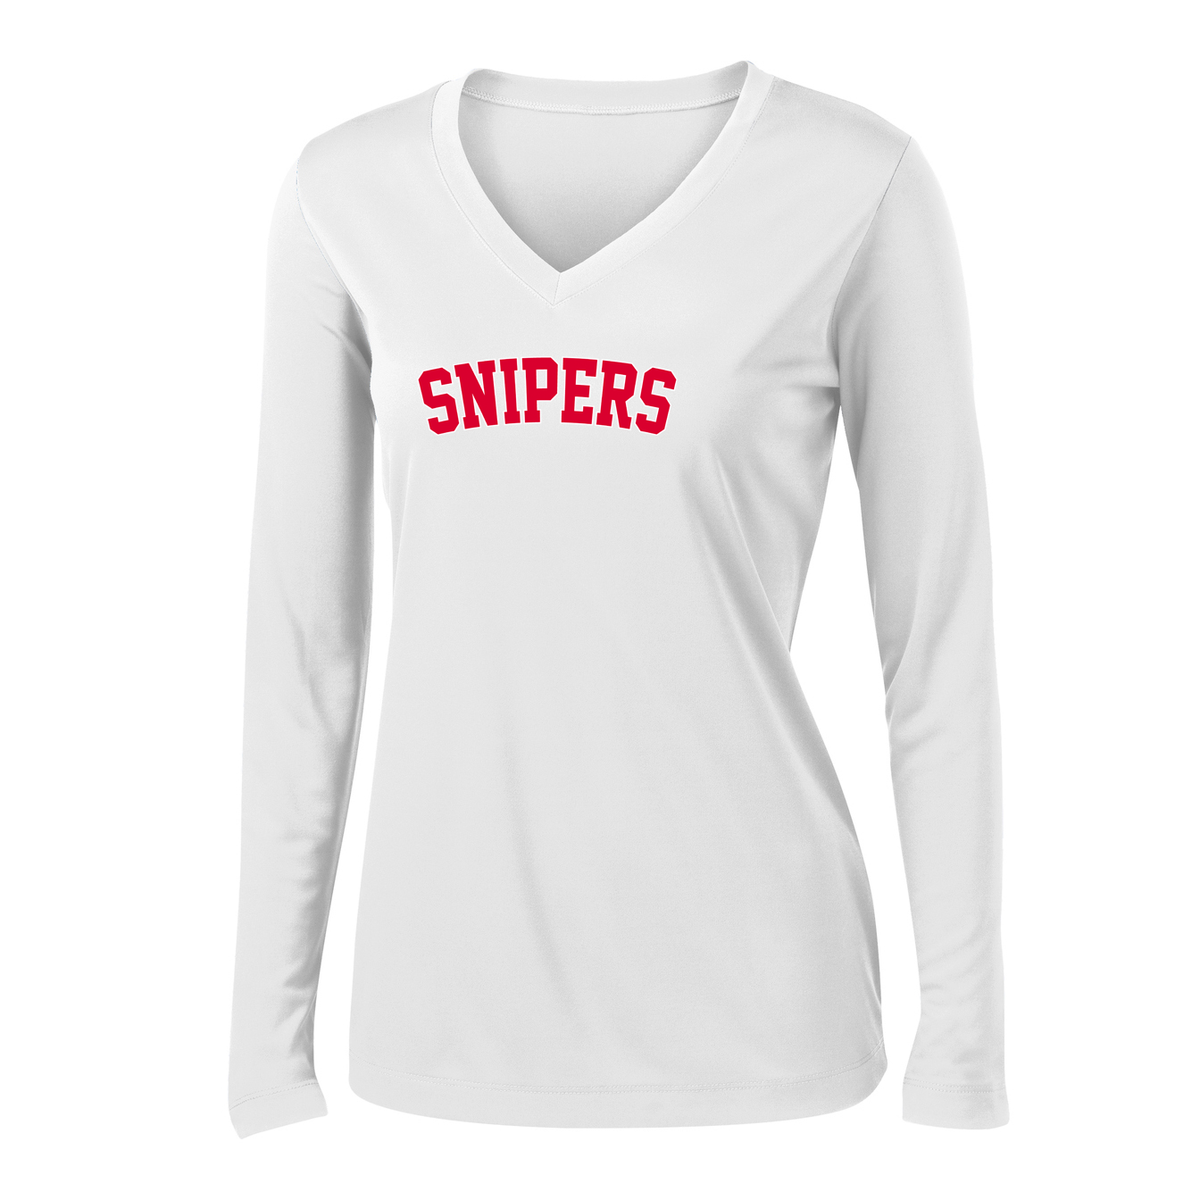 Snipers Baseball Women's Long Sleeve Performance Shirt